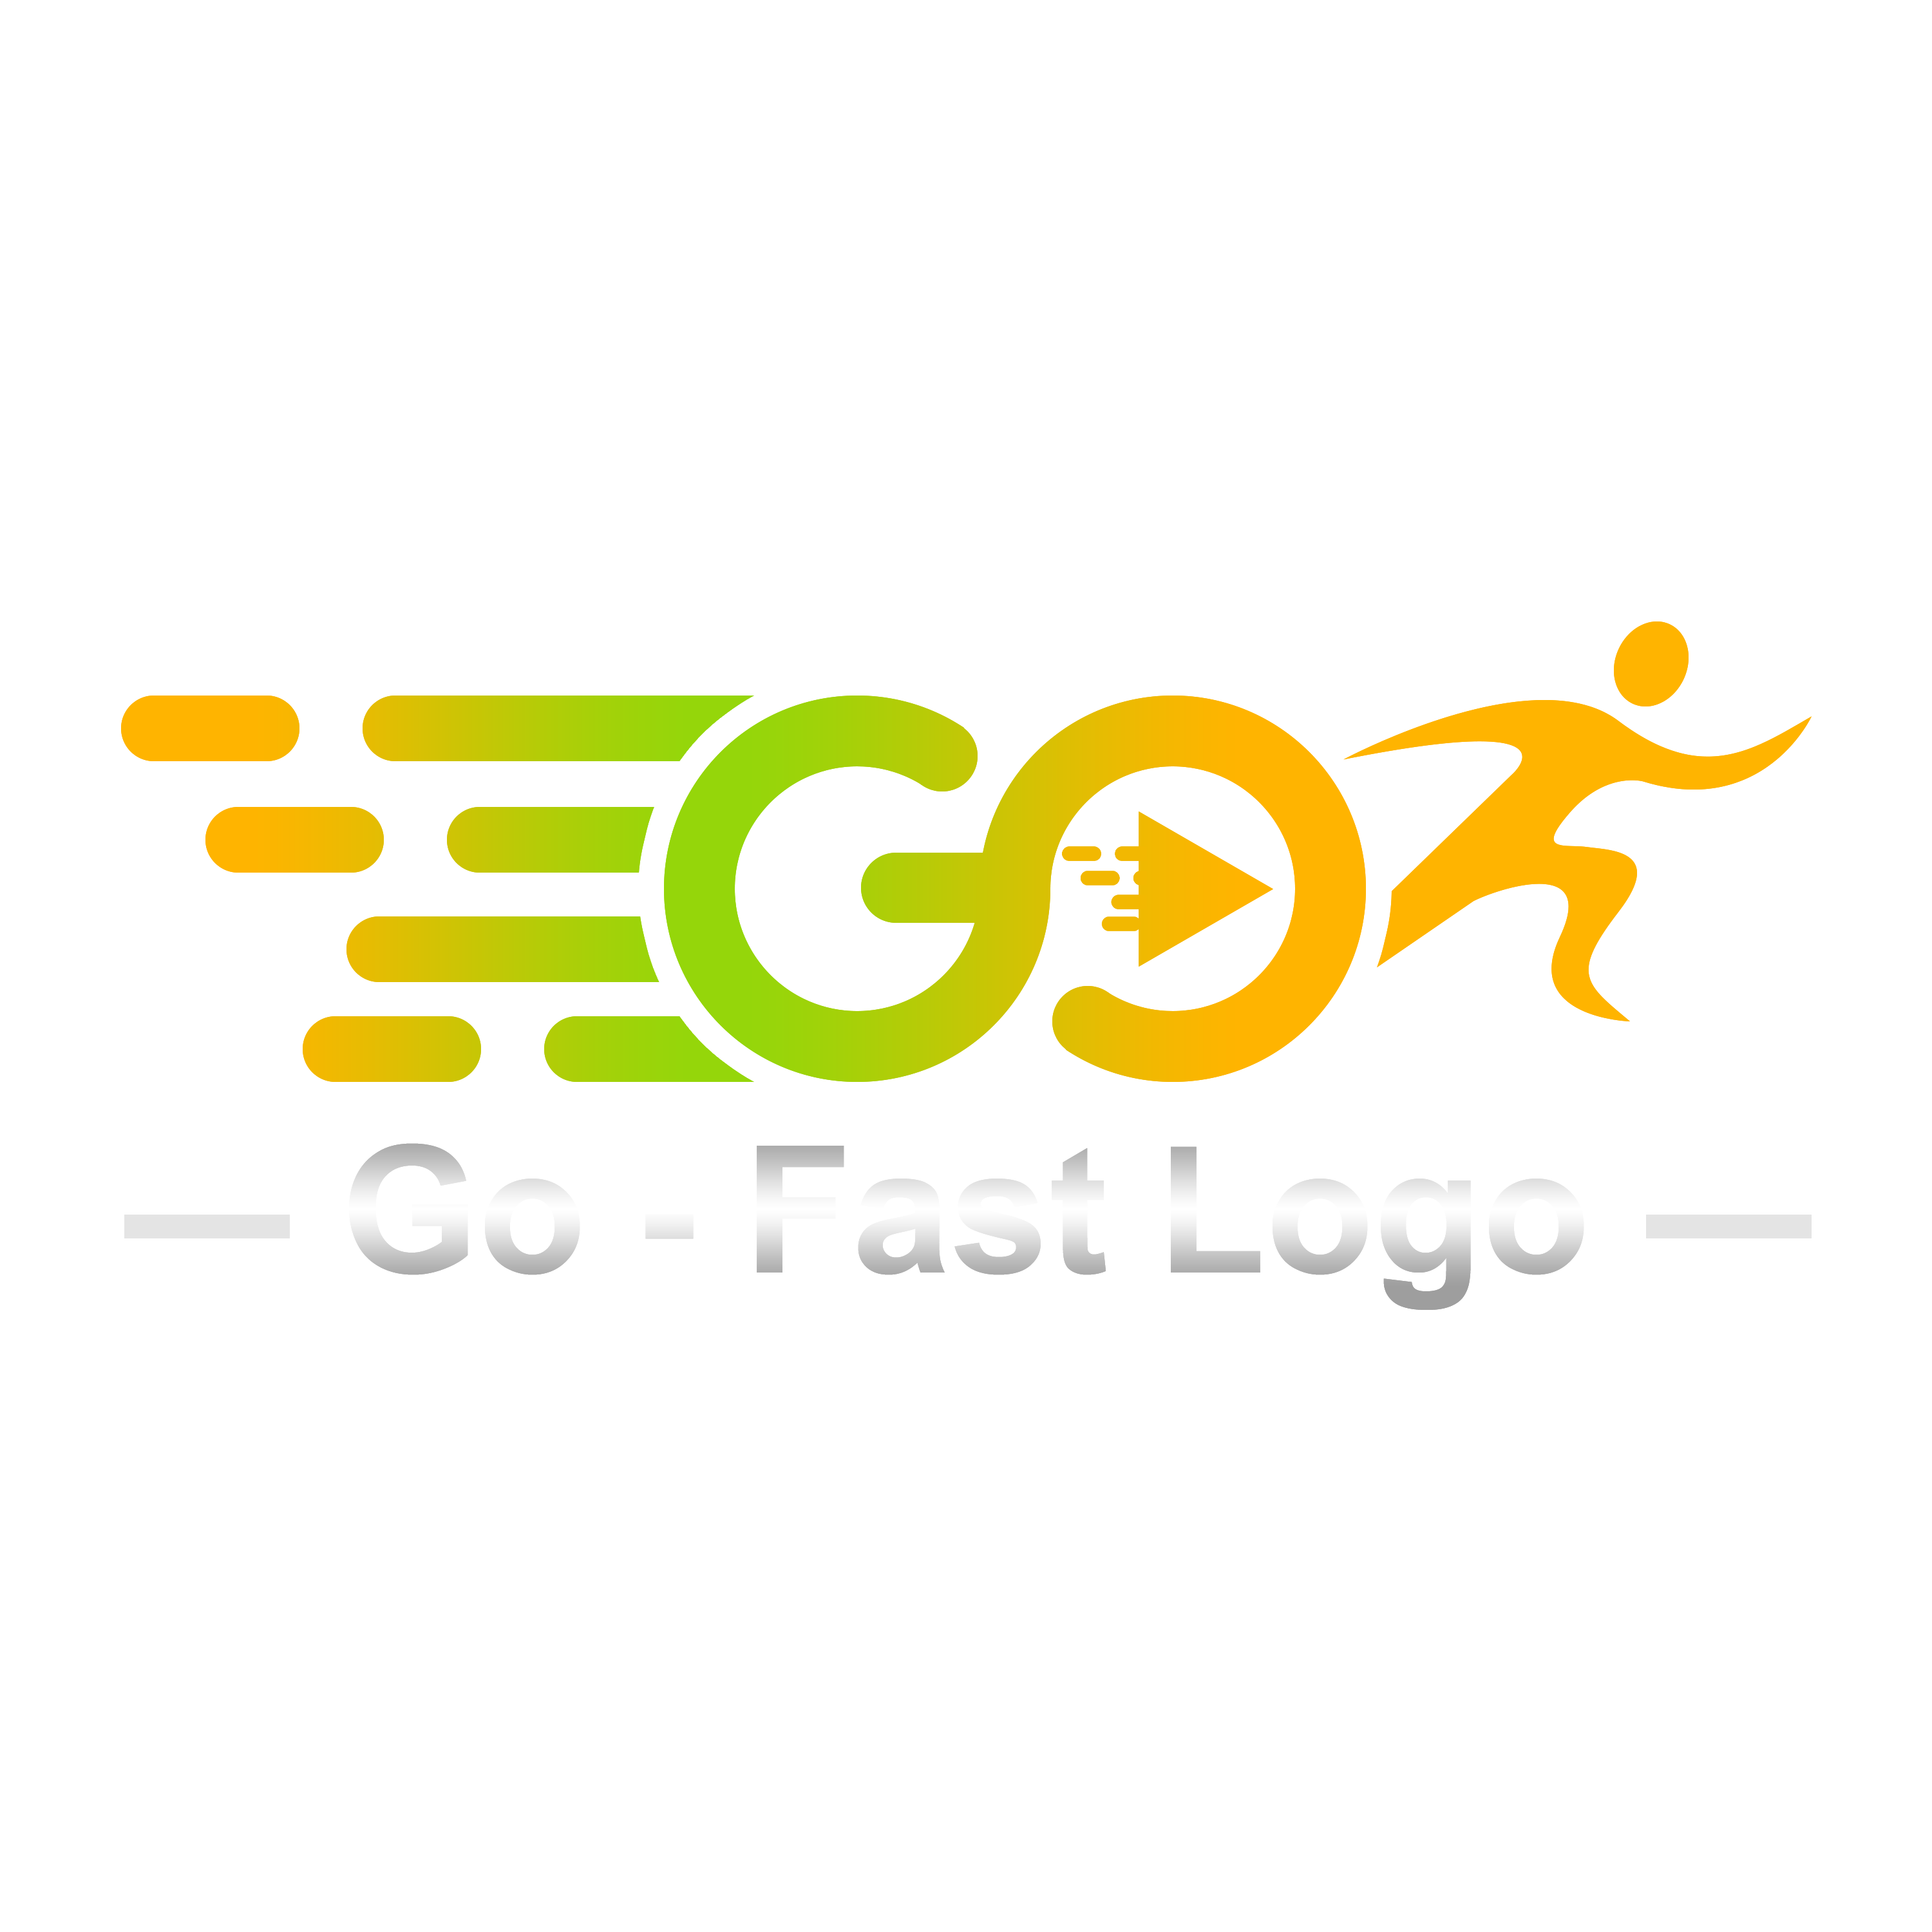 logo design template png